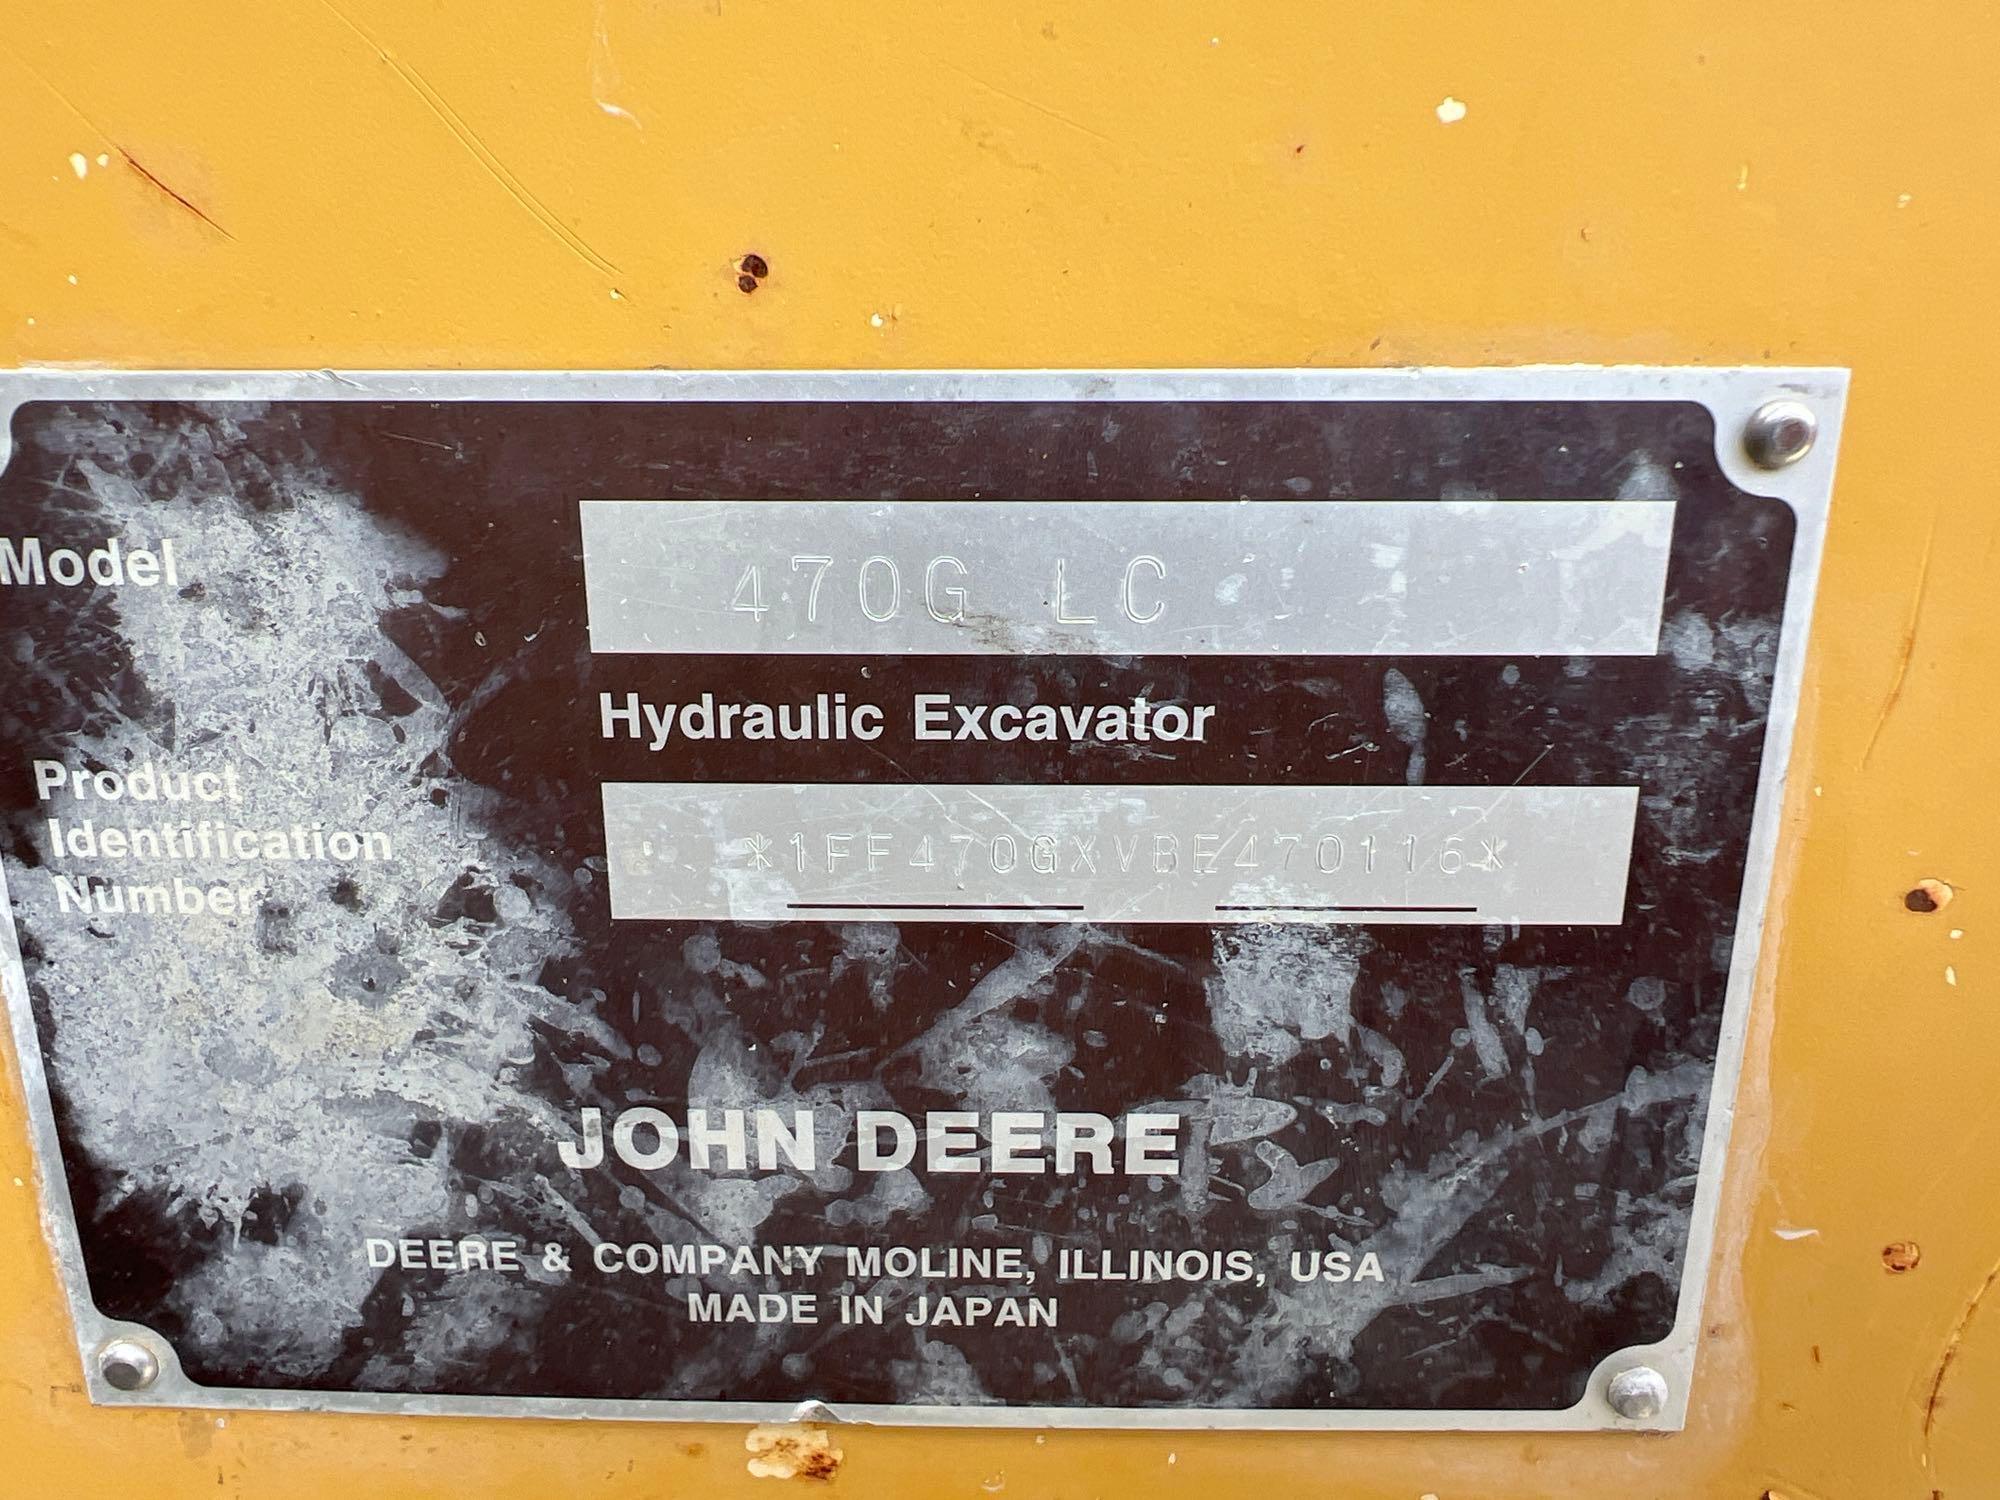 2011 JOHN DEERE 470G LC HYDRAULIC EXCAVATOR SN:1FF470GXVBE470116 powered by John Deere PSS 6135